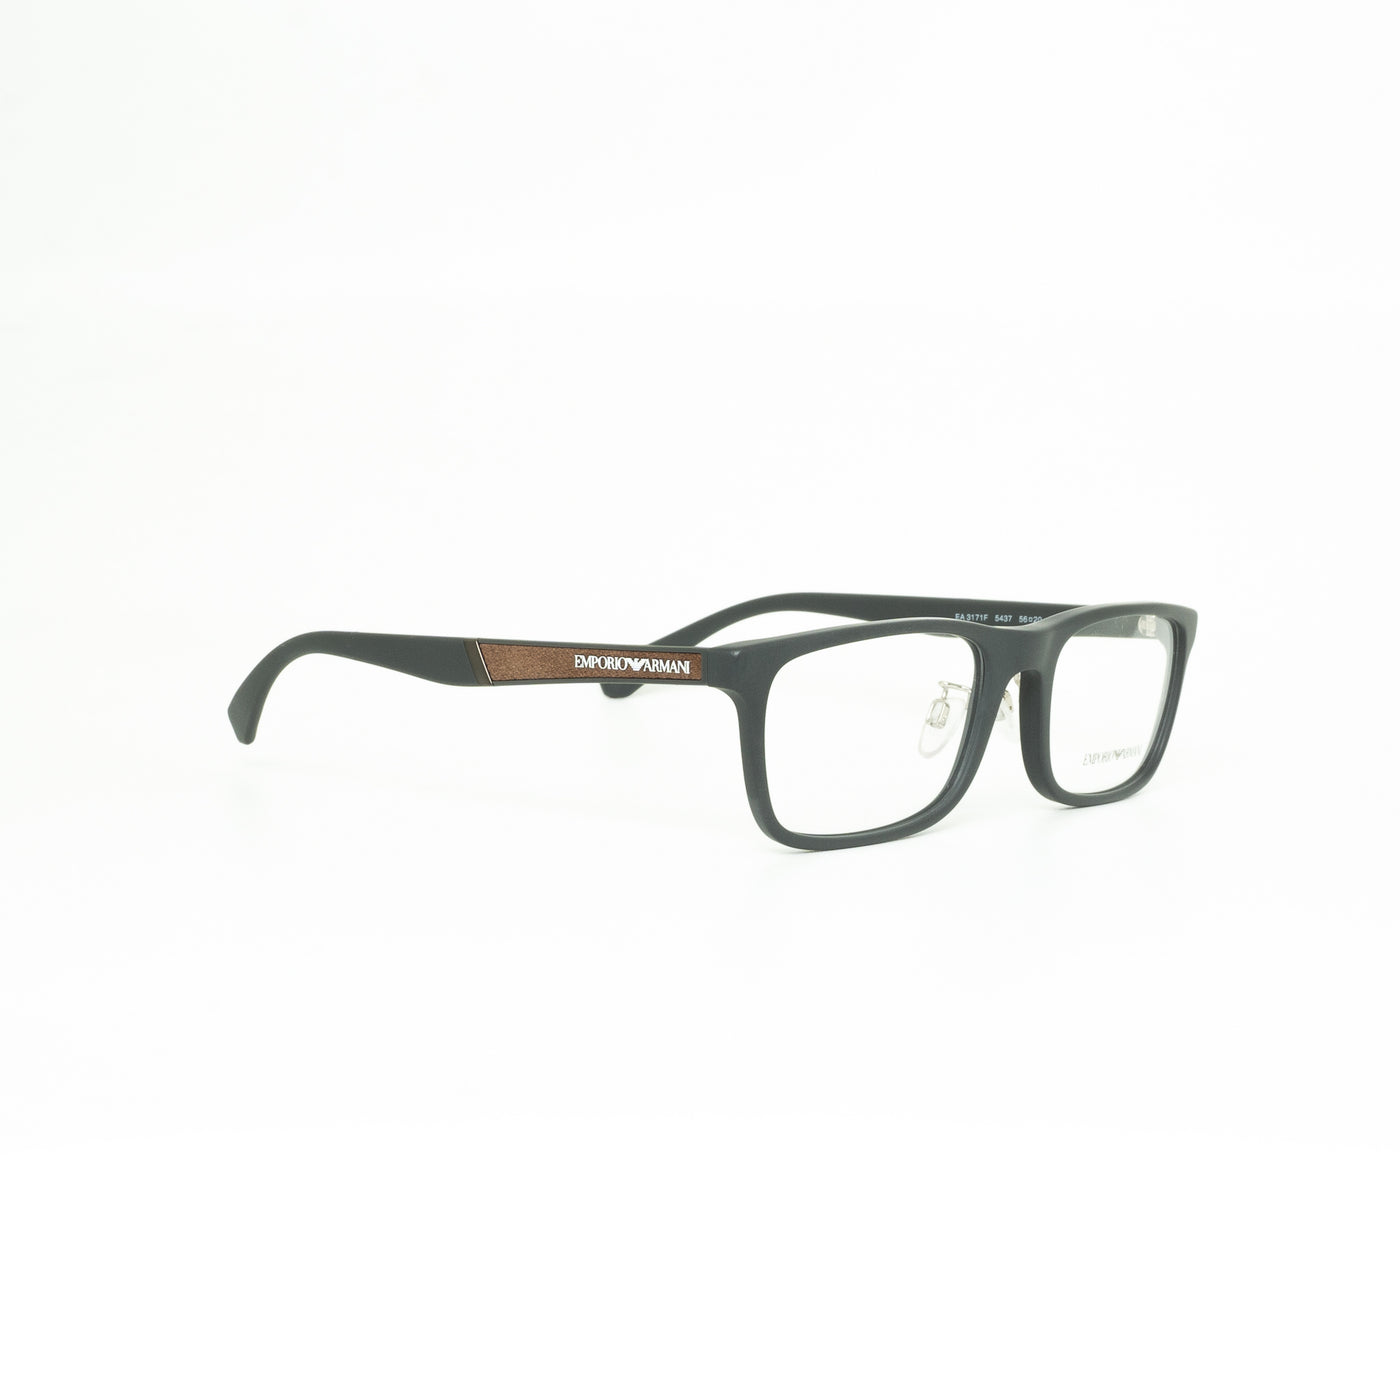 Emporio Armani EA3171F543756 | Eyeglasses - Vision Express Optical Philippines